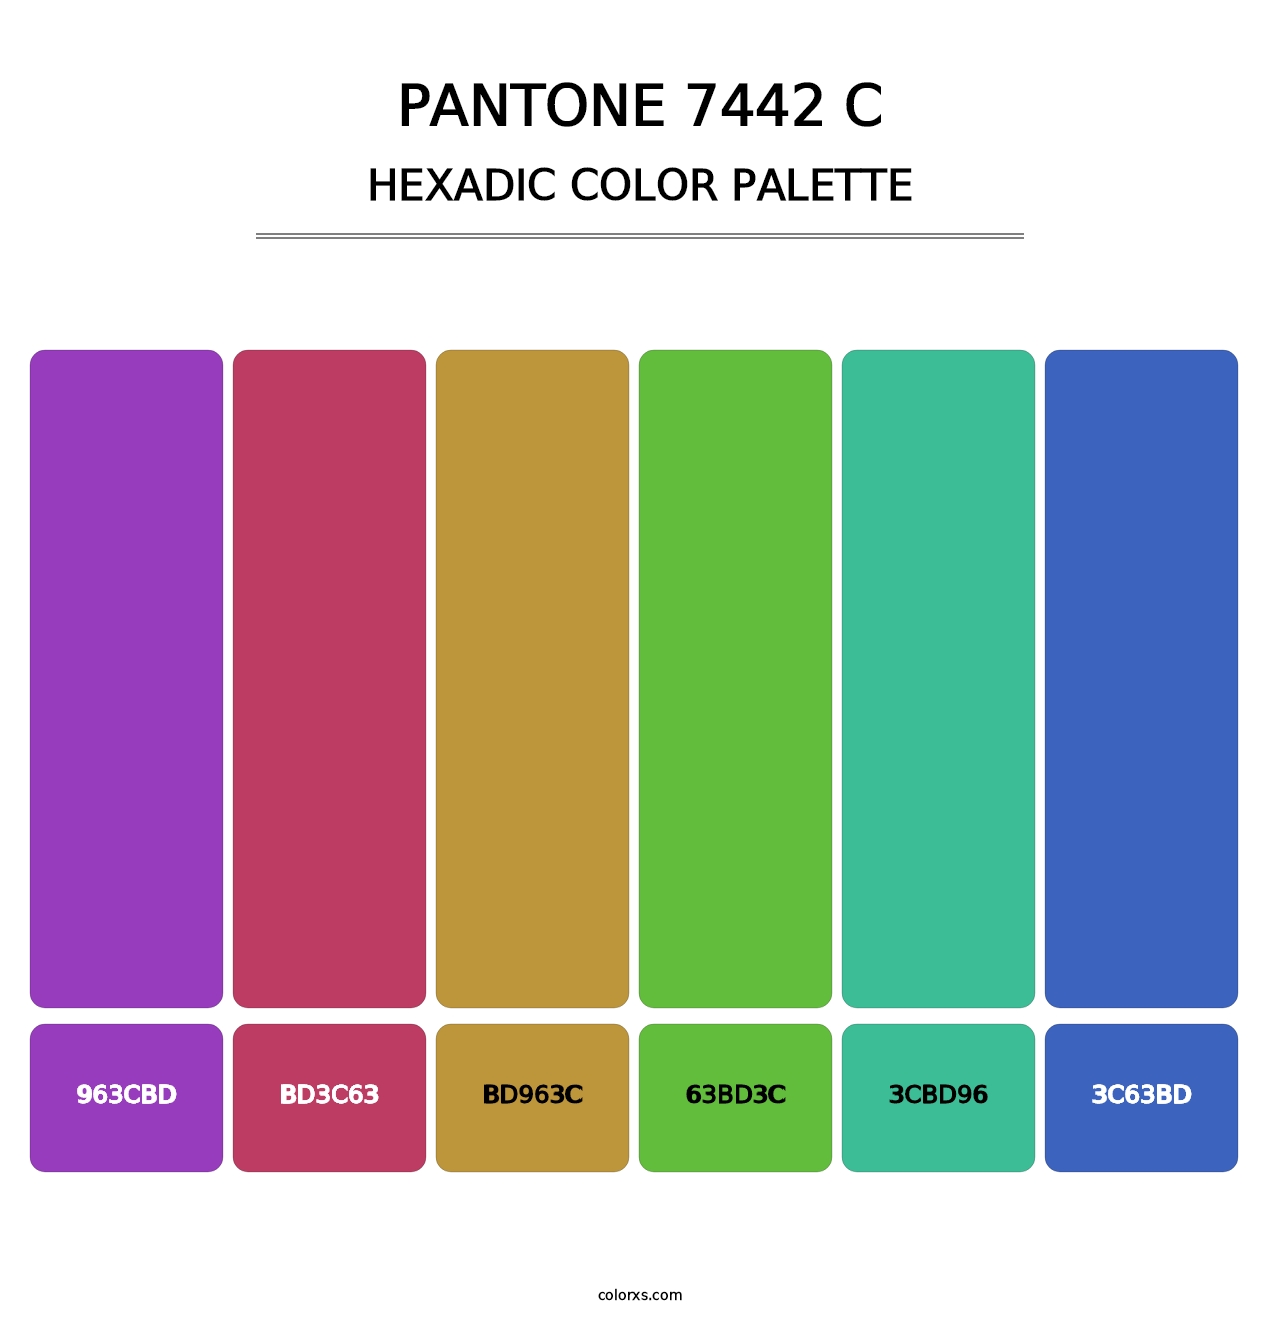 PANTONE 7442 C - Hexadic Color Palette